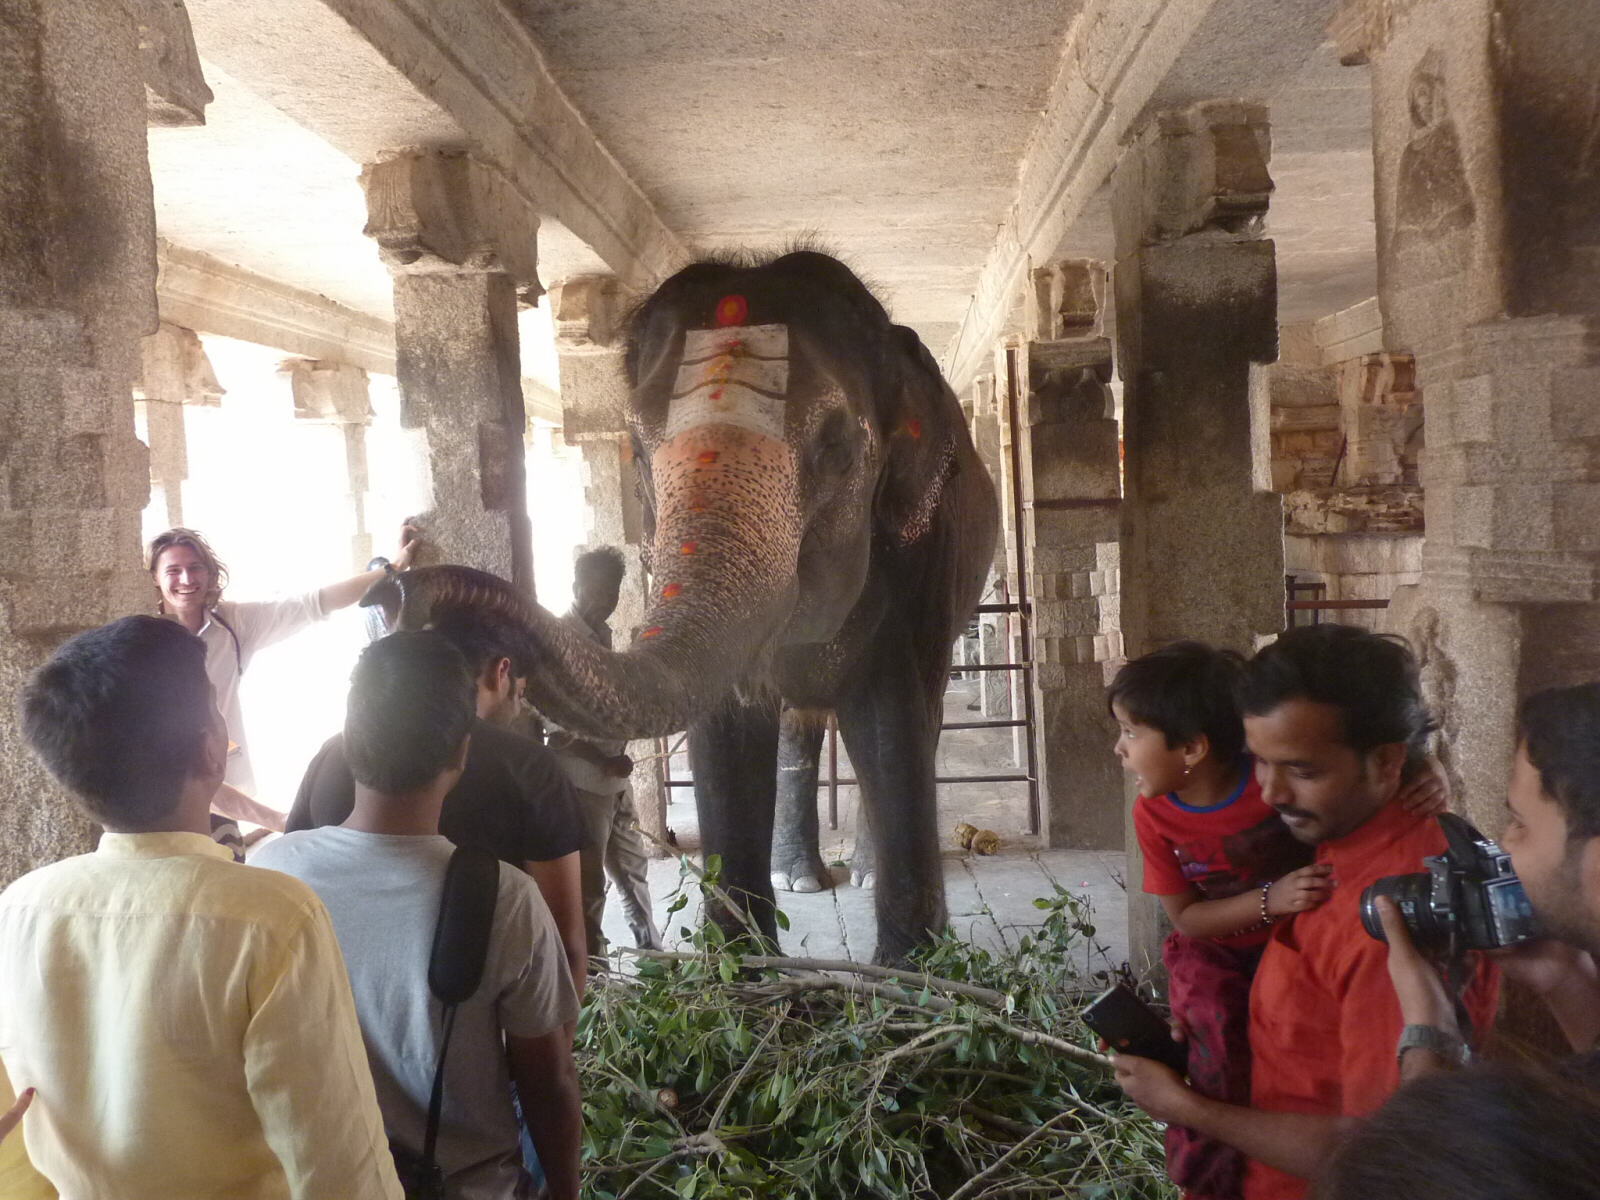 Laxmi the temple elephant in Virupaksha temple, Hampi